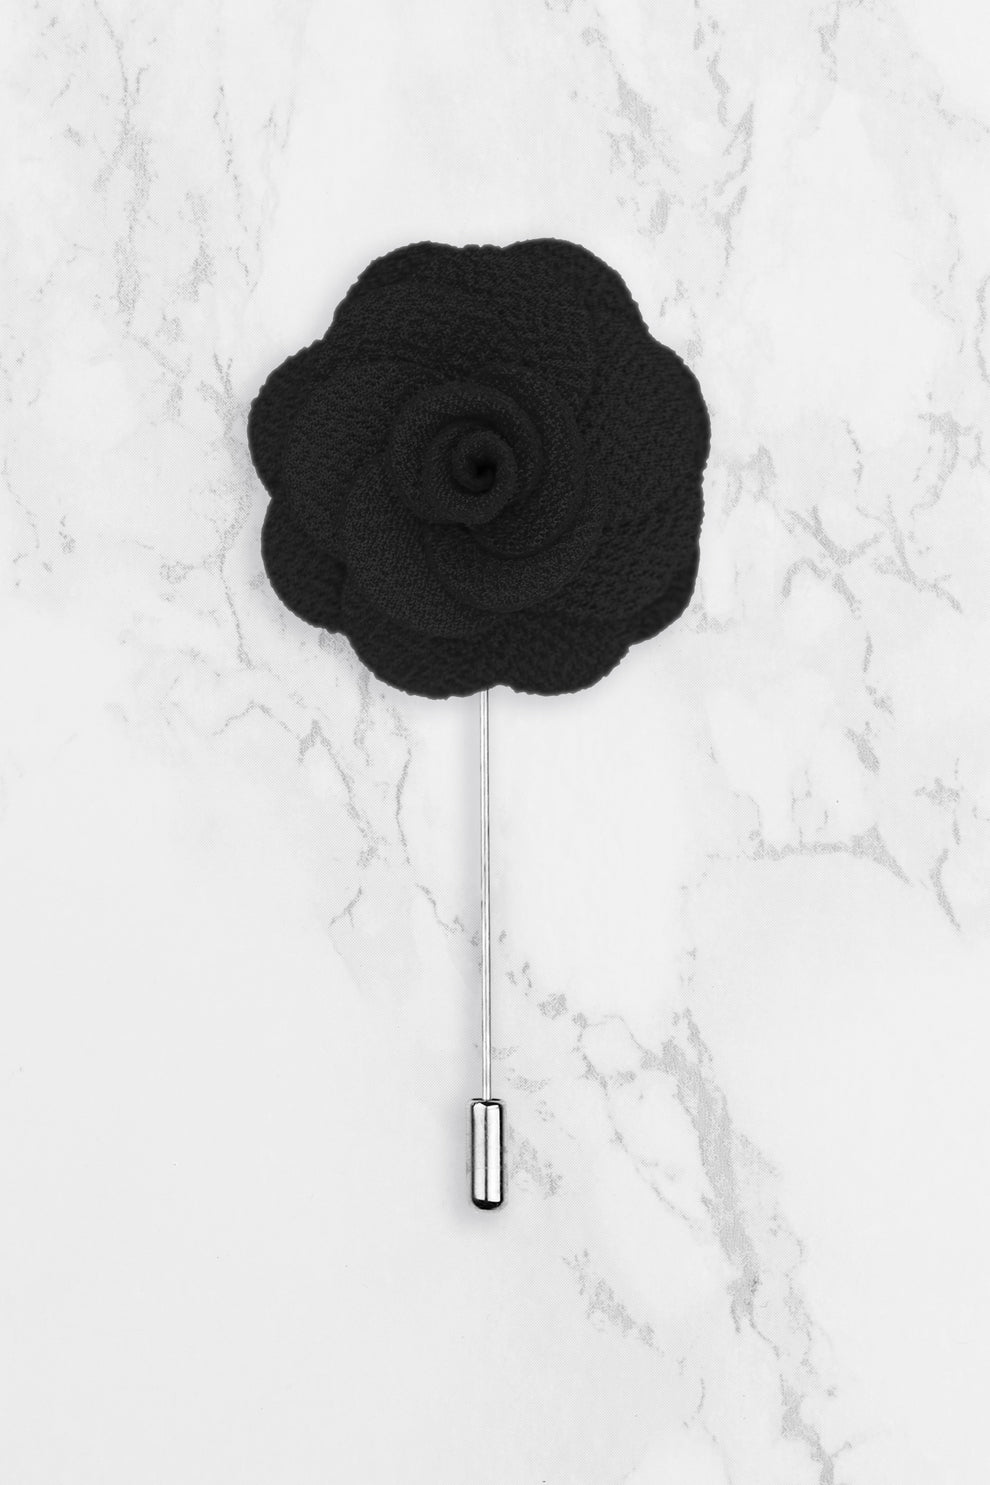 Men's Black Floral Rose Lapel Pin - THE GENTS LAB UK